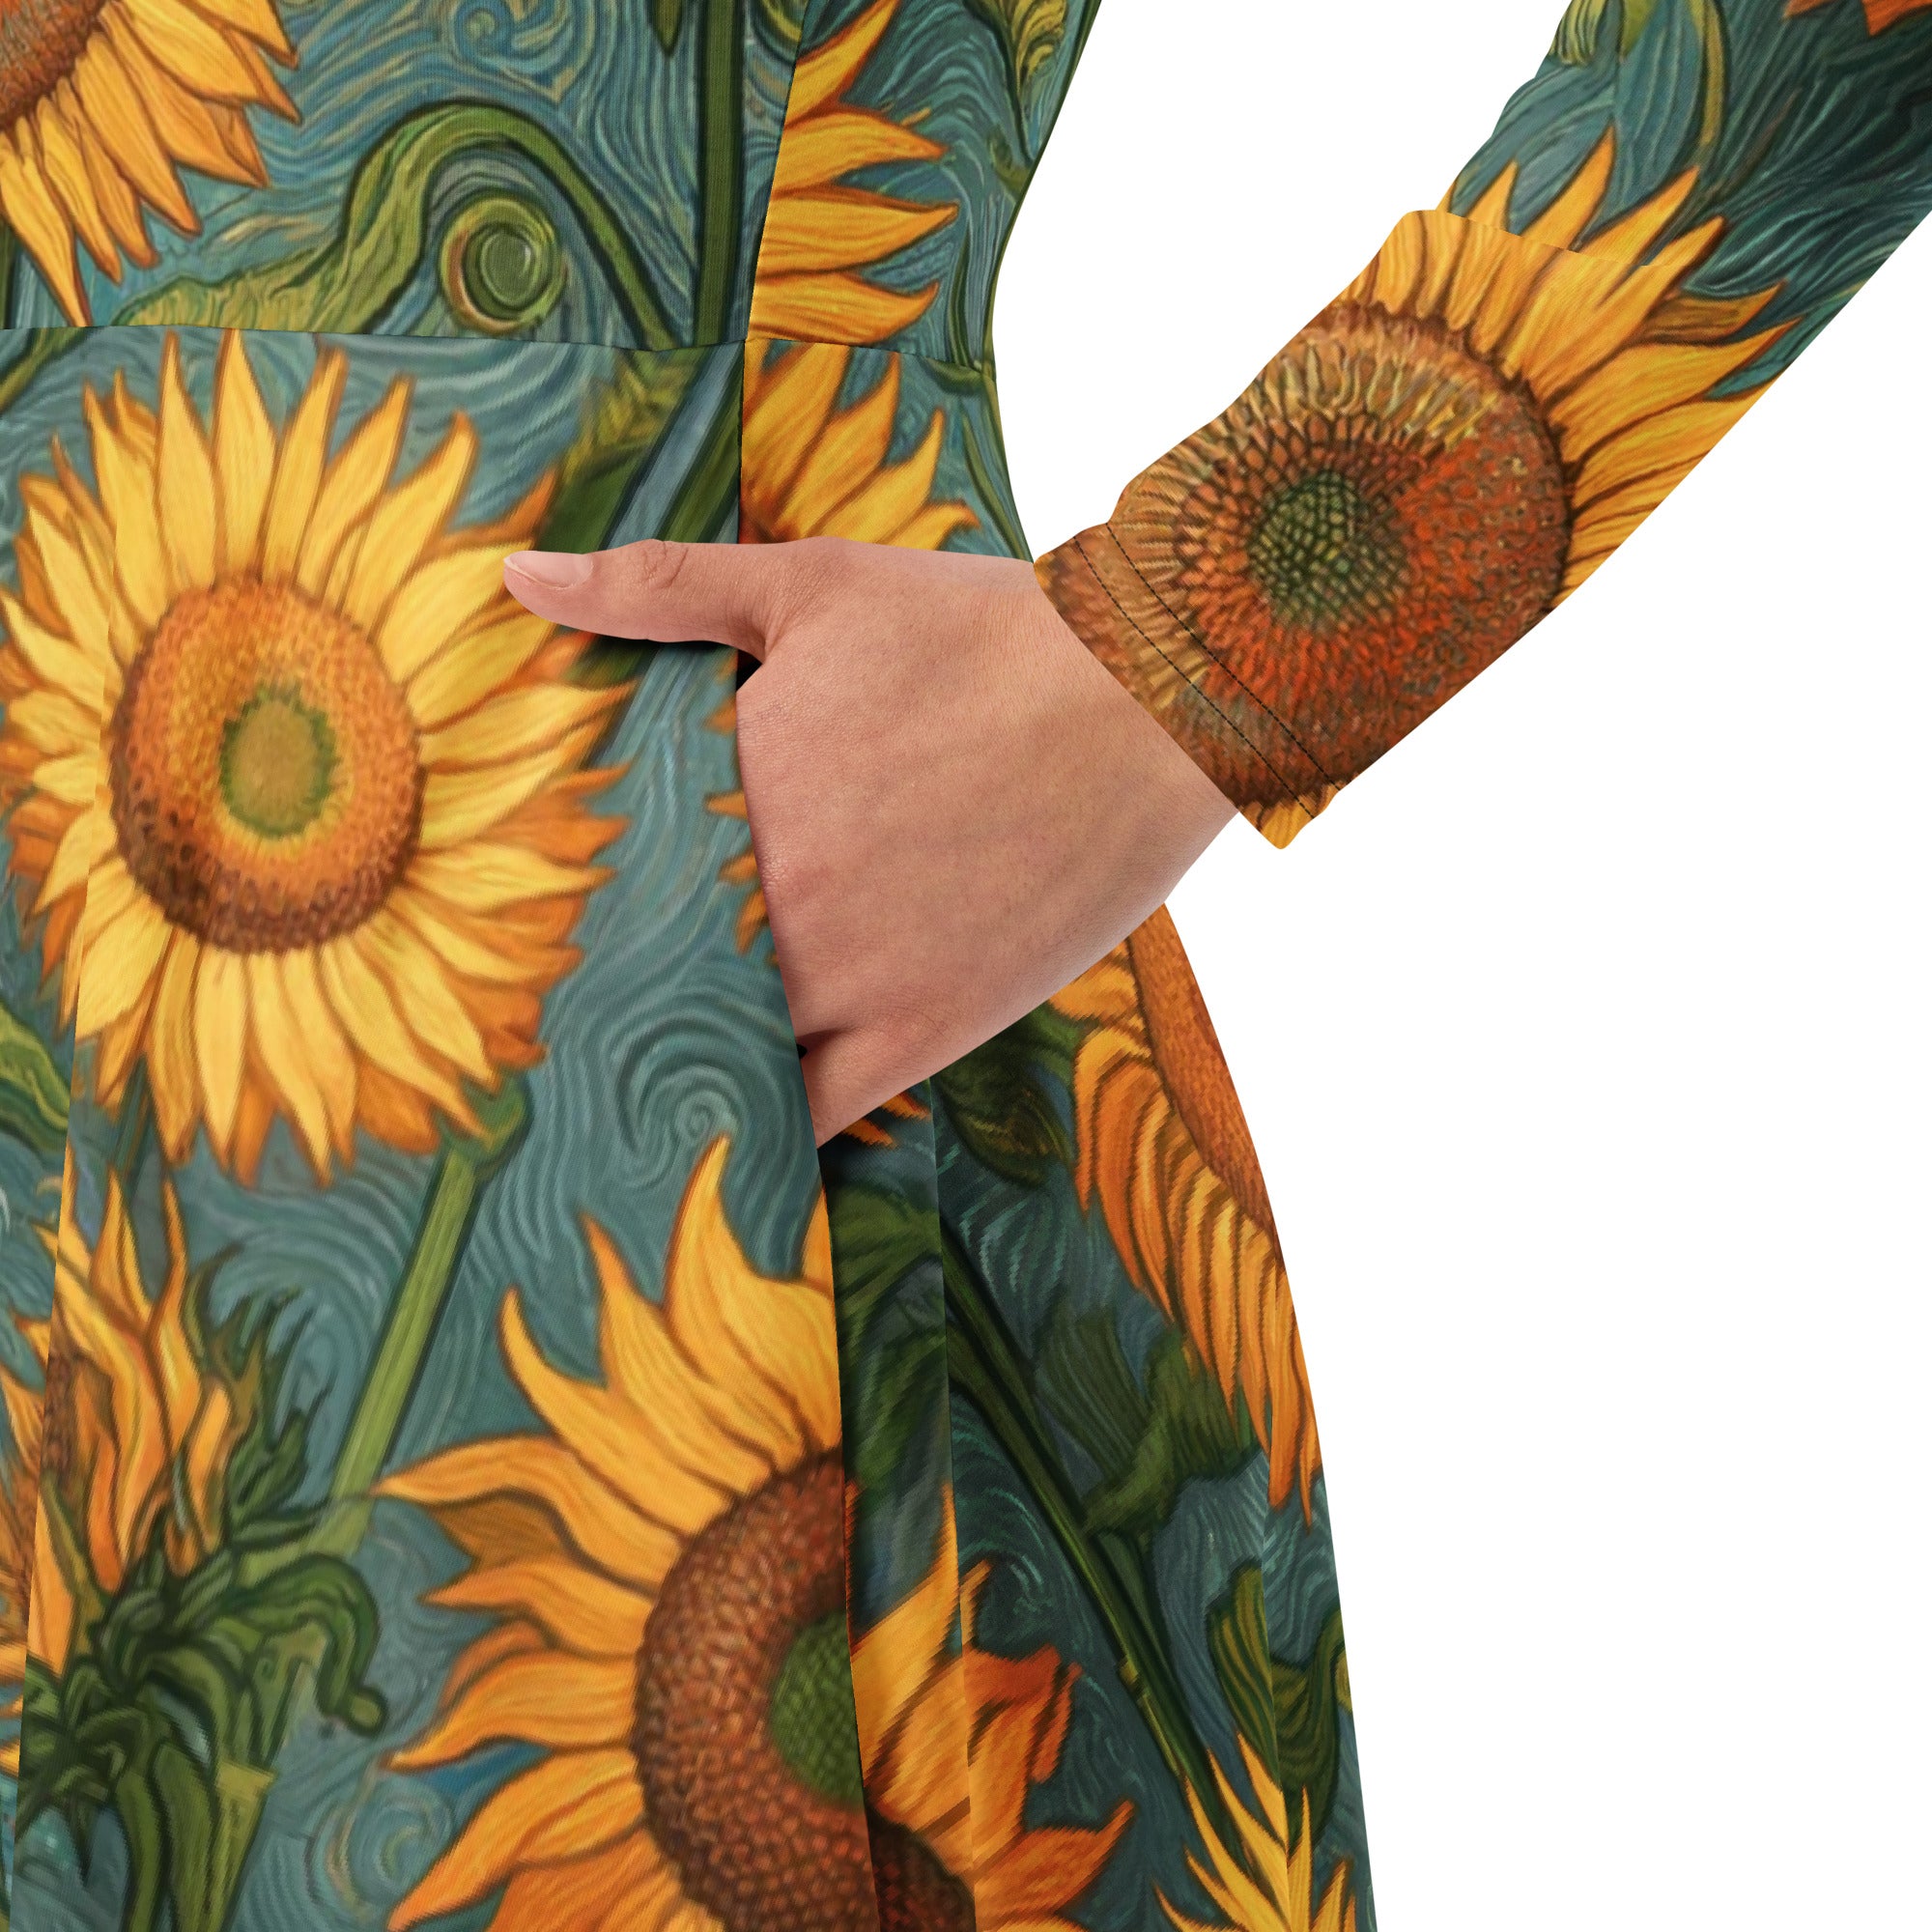 Vincent van Gogh 'Sunflowers' Famous Painting Long Sleeve Midi Dress | Premium Art Midi Dress